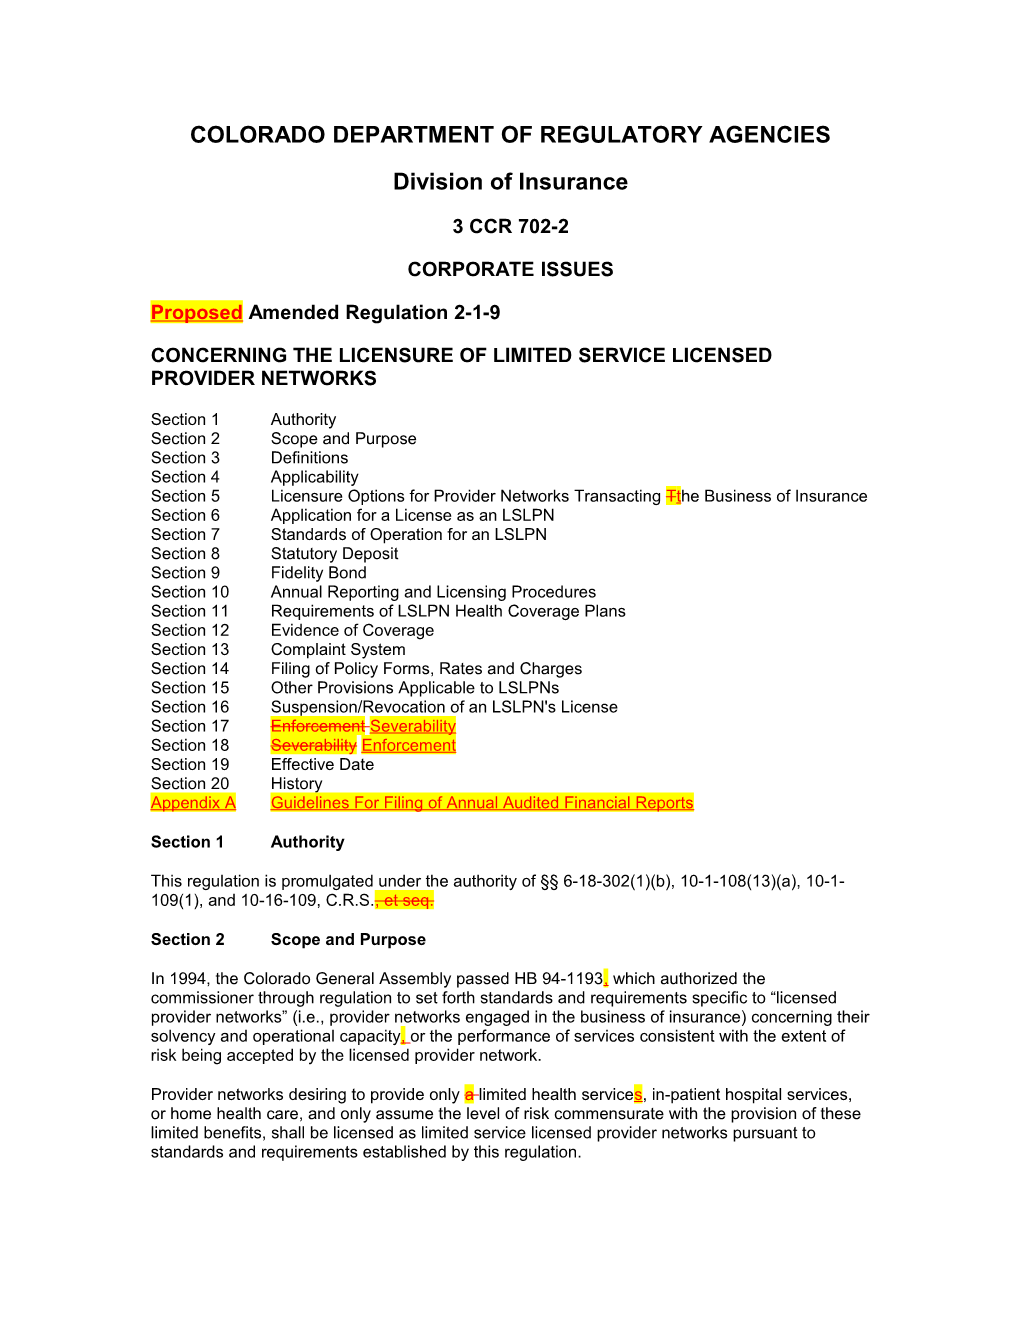 Amended Regulation 2-1-9 Concerning the Licensure of Limited Service Licensed Provider Networks